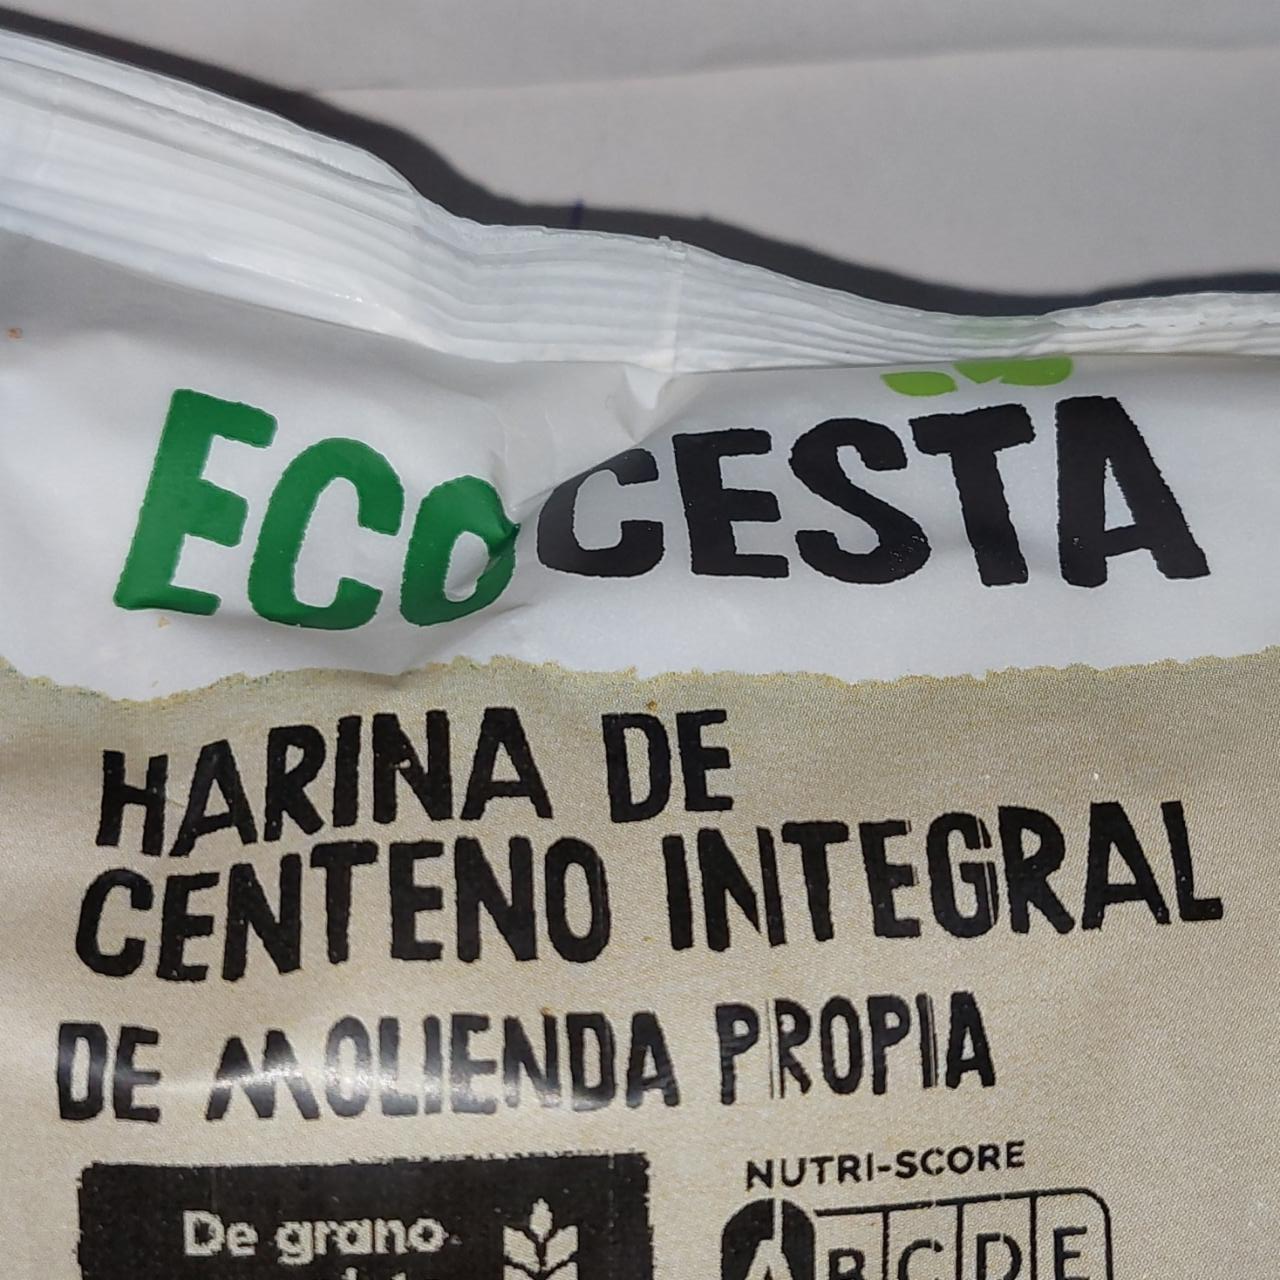 Fotografie - Harina de centeno integral Ecocesta